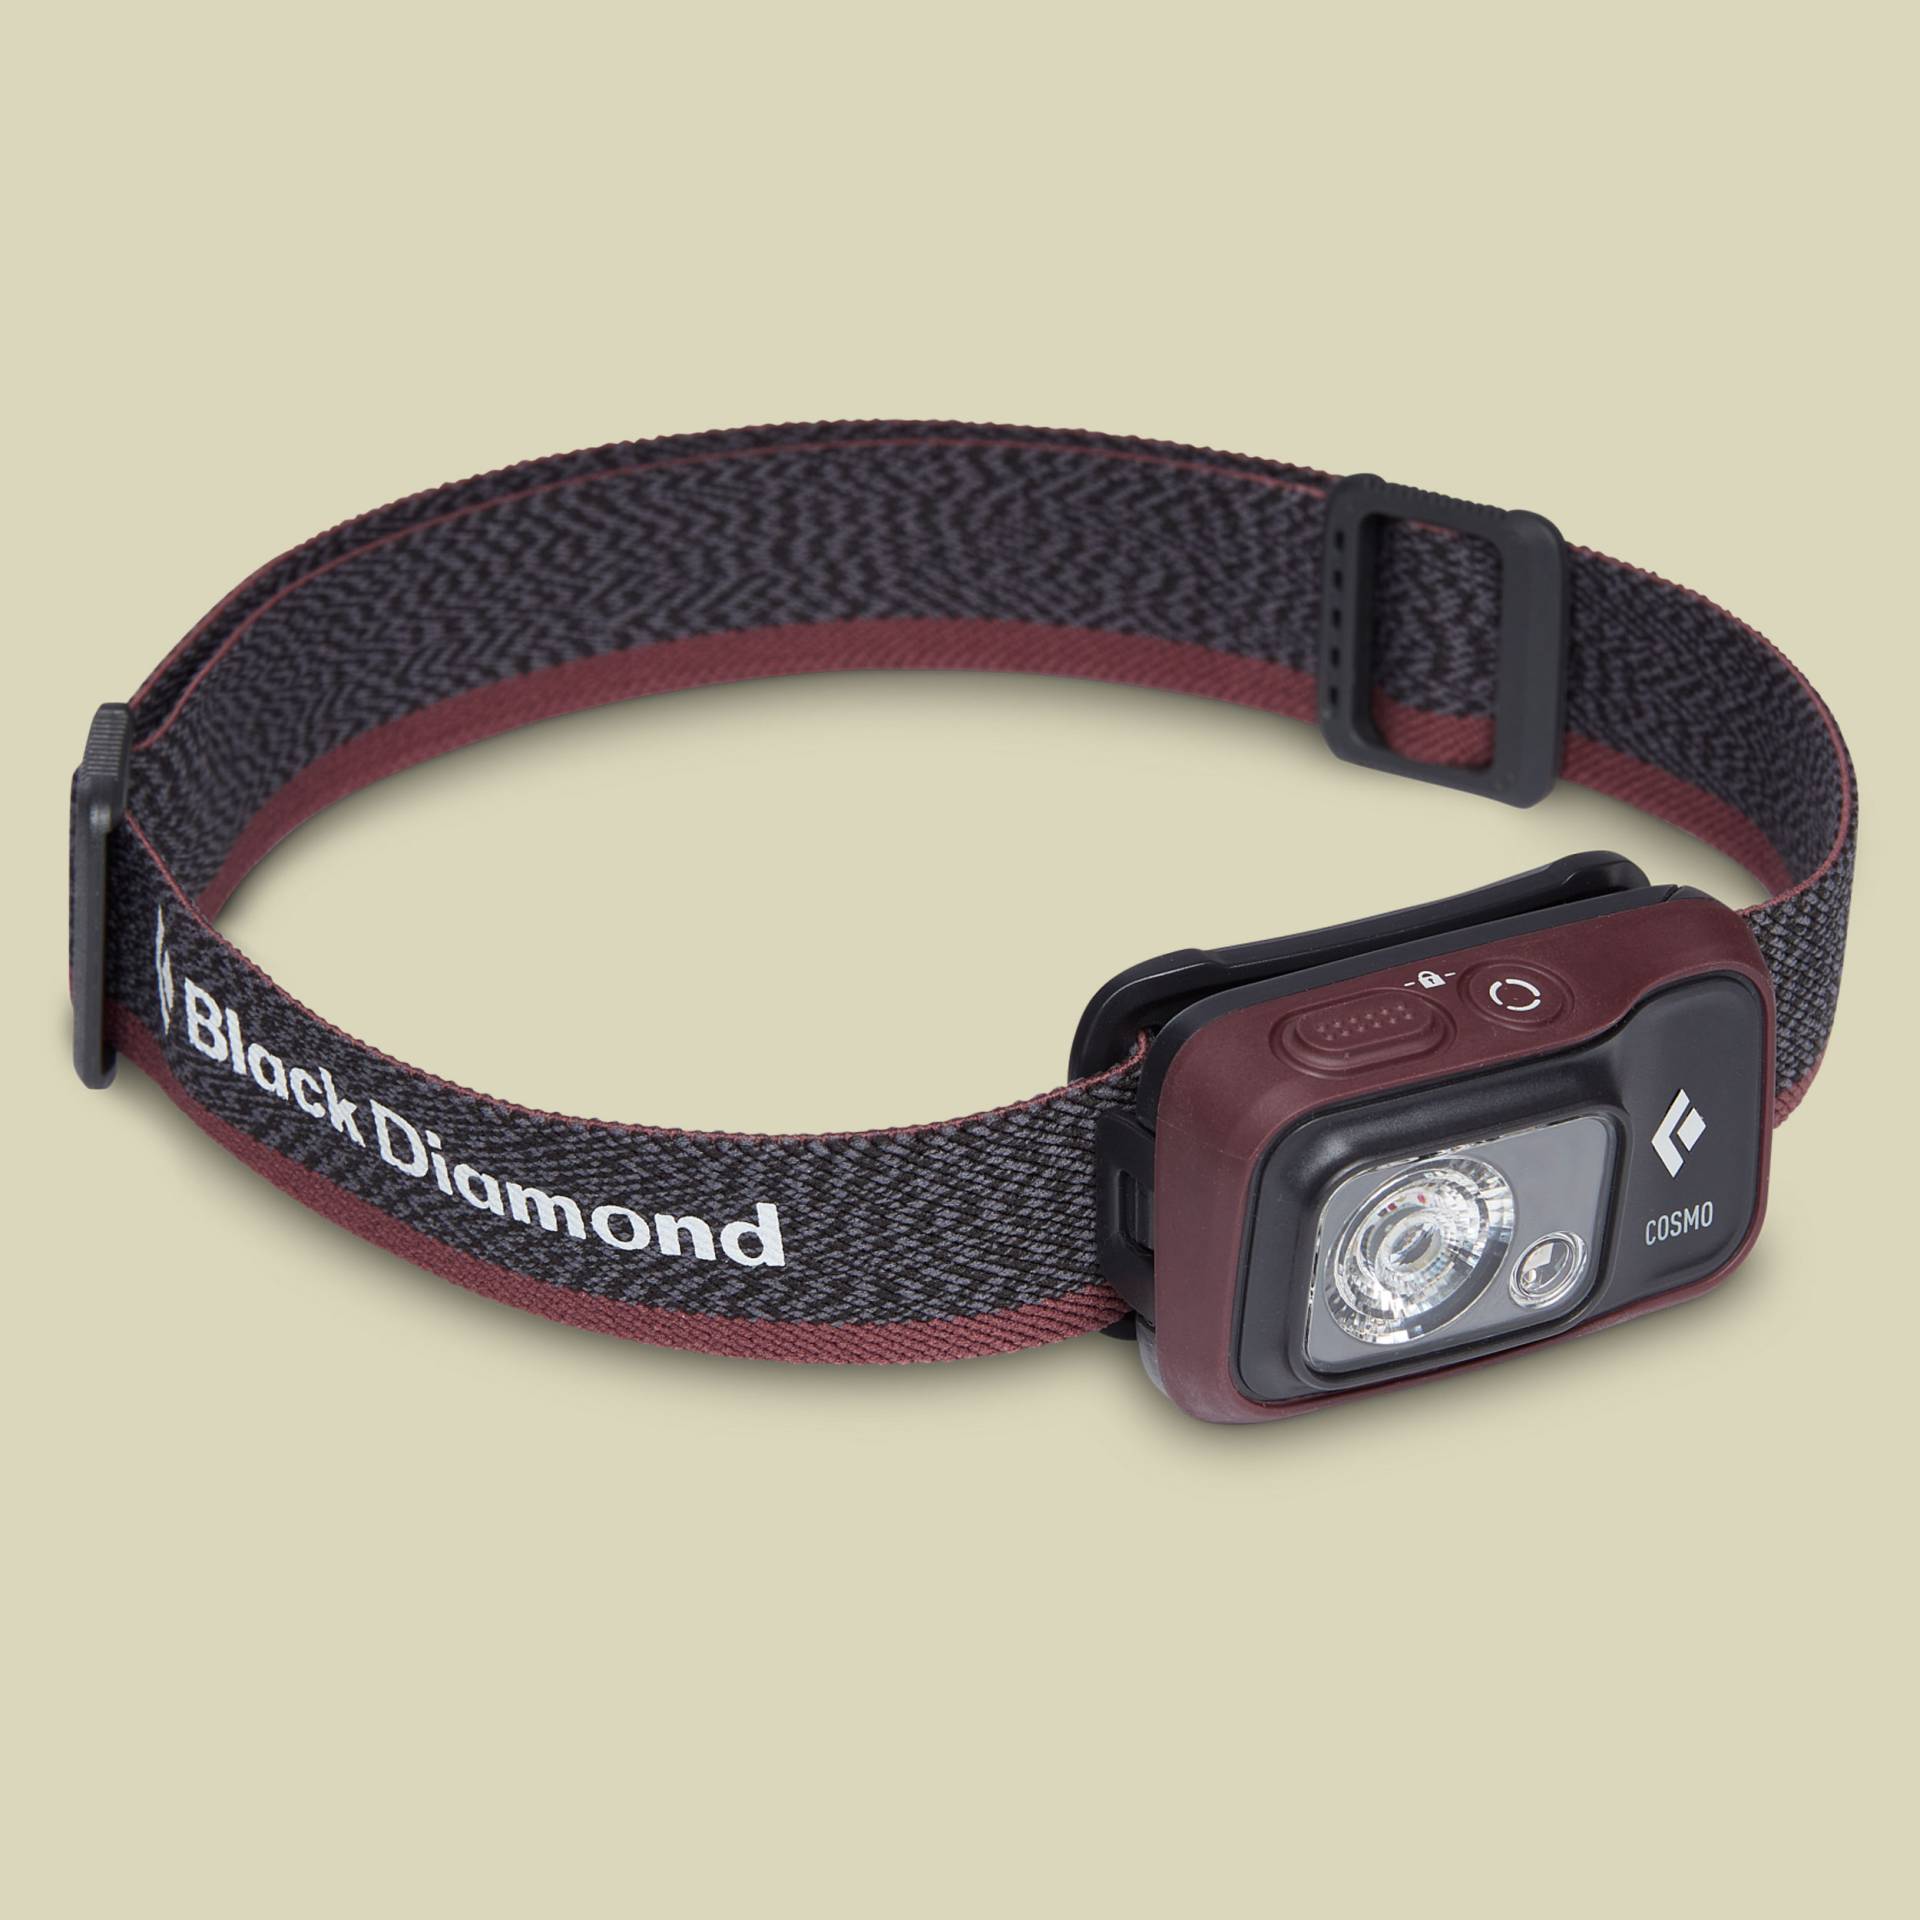 Cosmo 350 Headlamp Größe one size Farbe bordeaux von Black Diamond